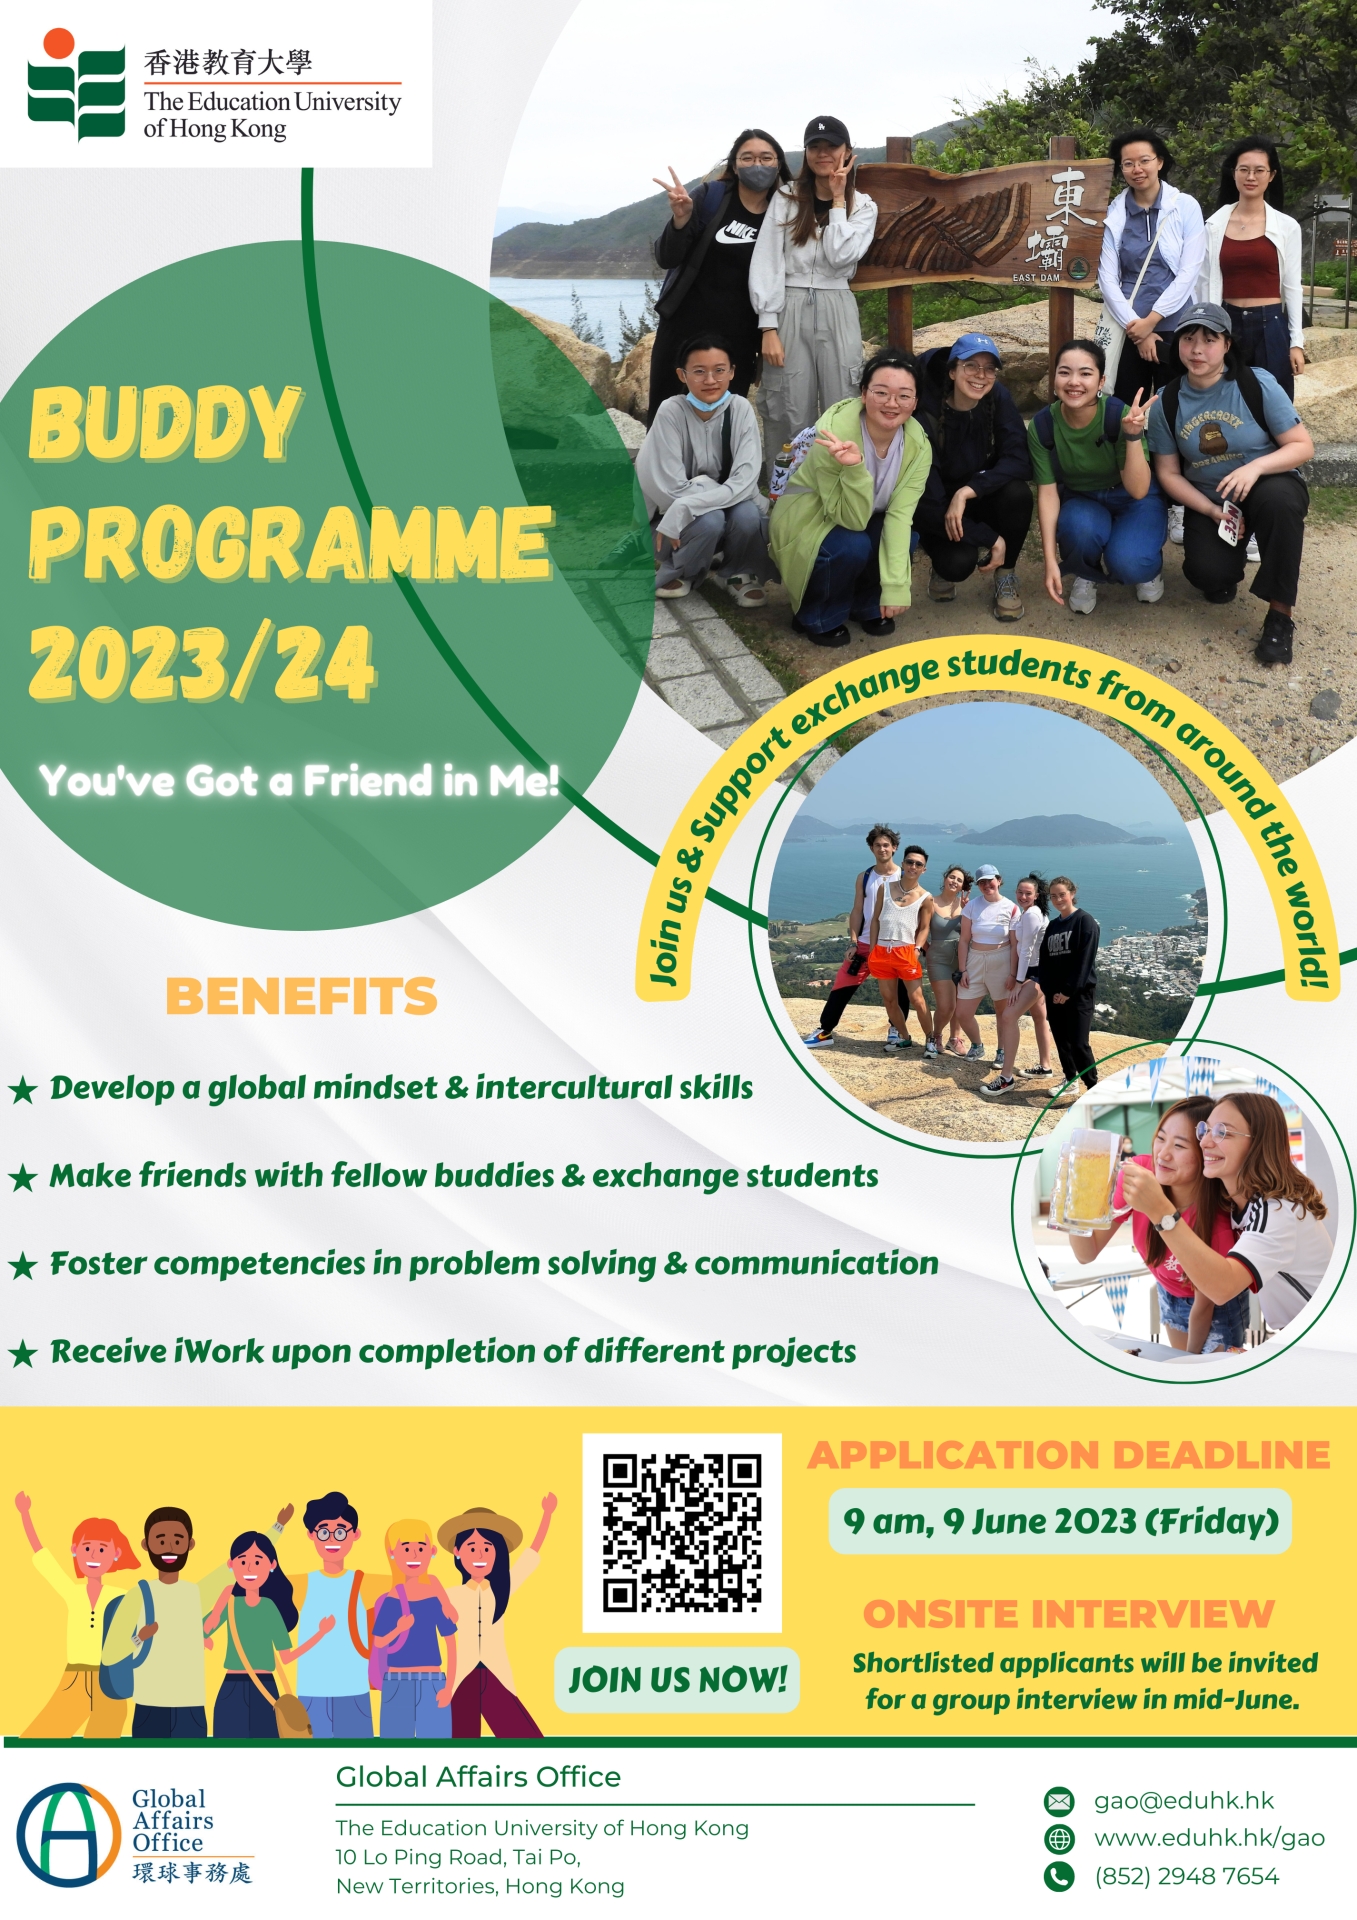 Buddy Programme 2023/24